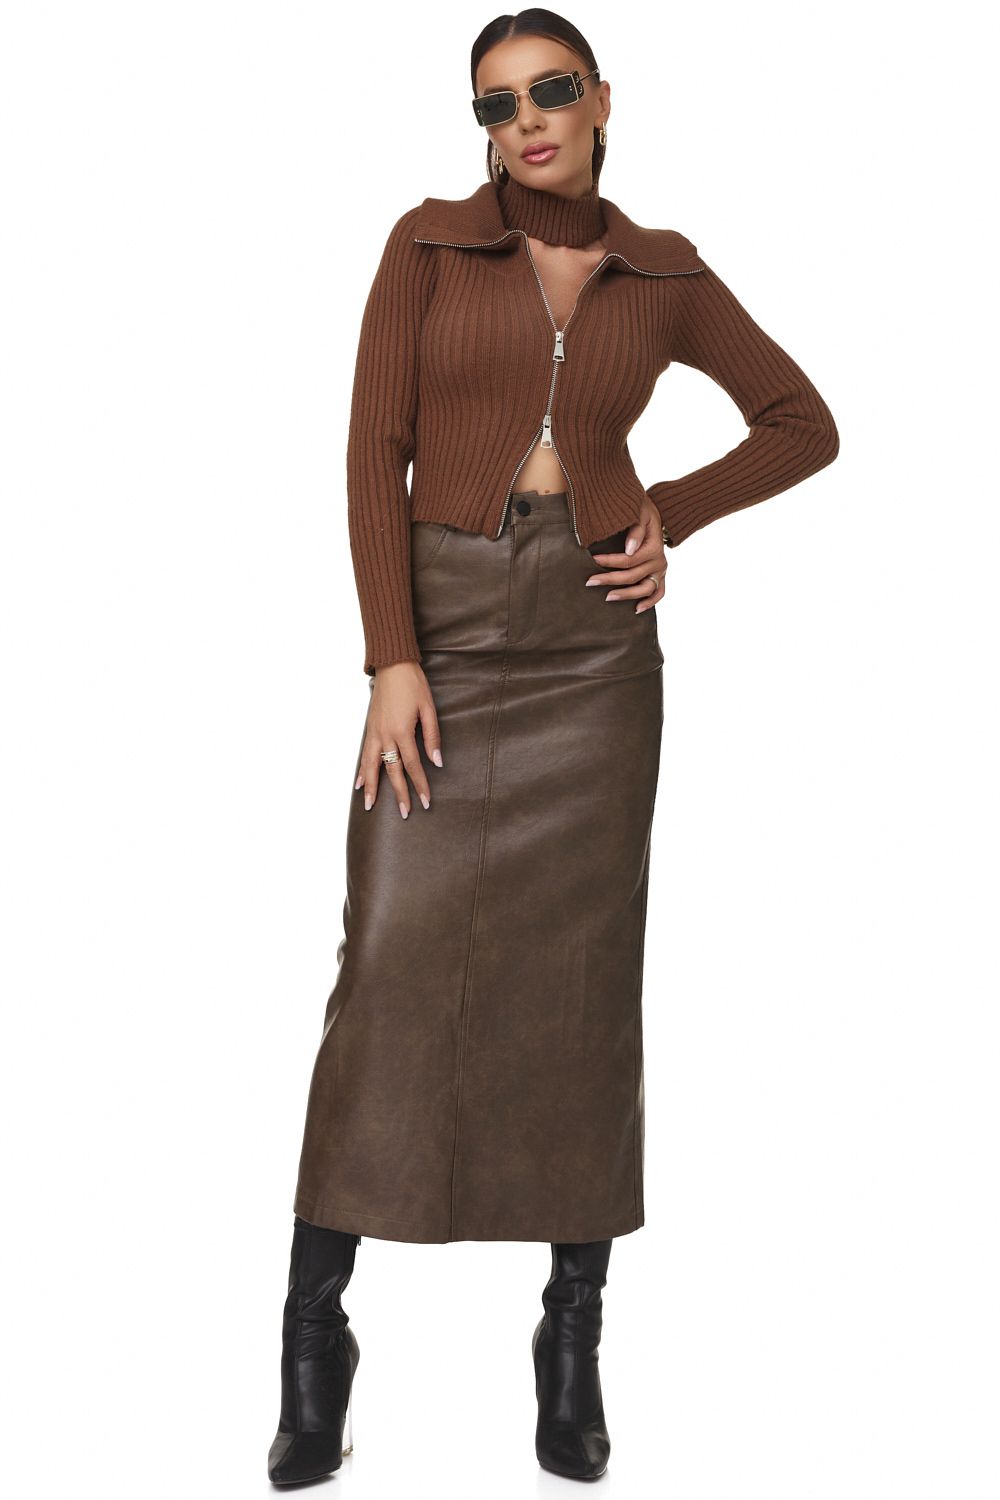 Bogas Mirasila brown casual lady skirt